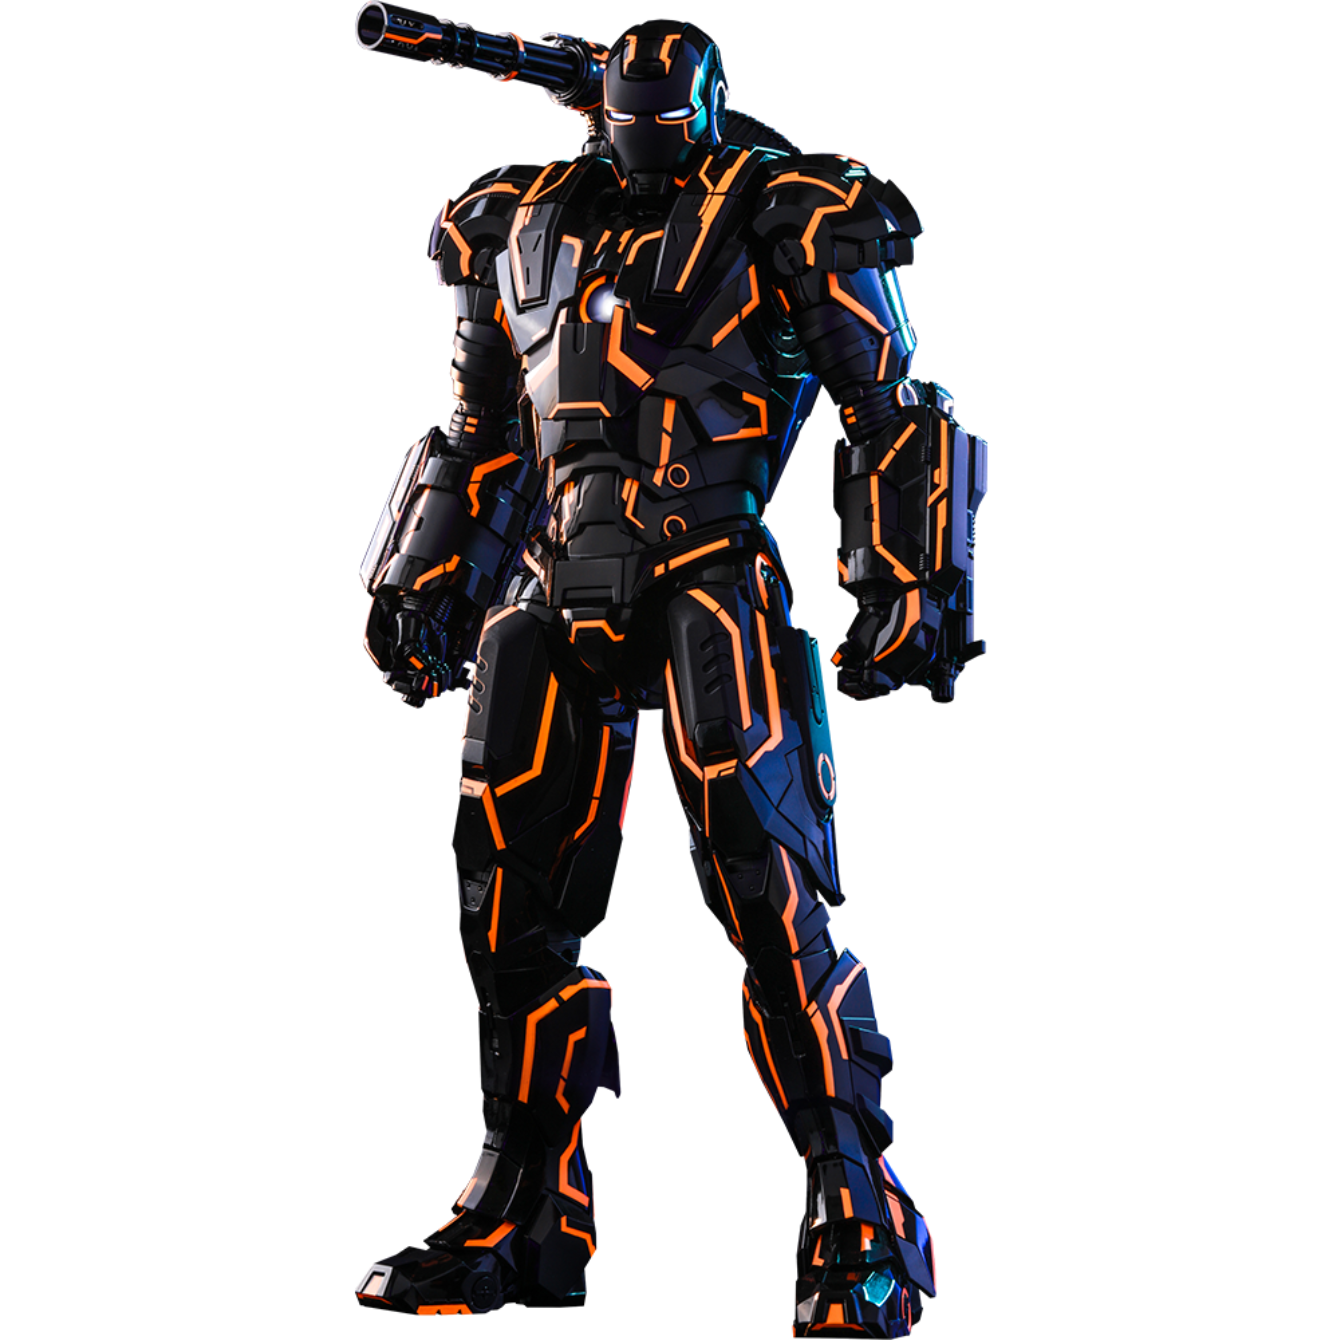 Neon Tech War Machine - Sixth Scale Figure by Hot Toys